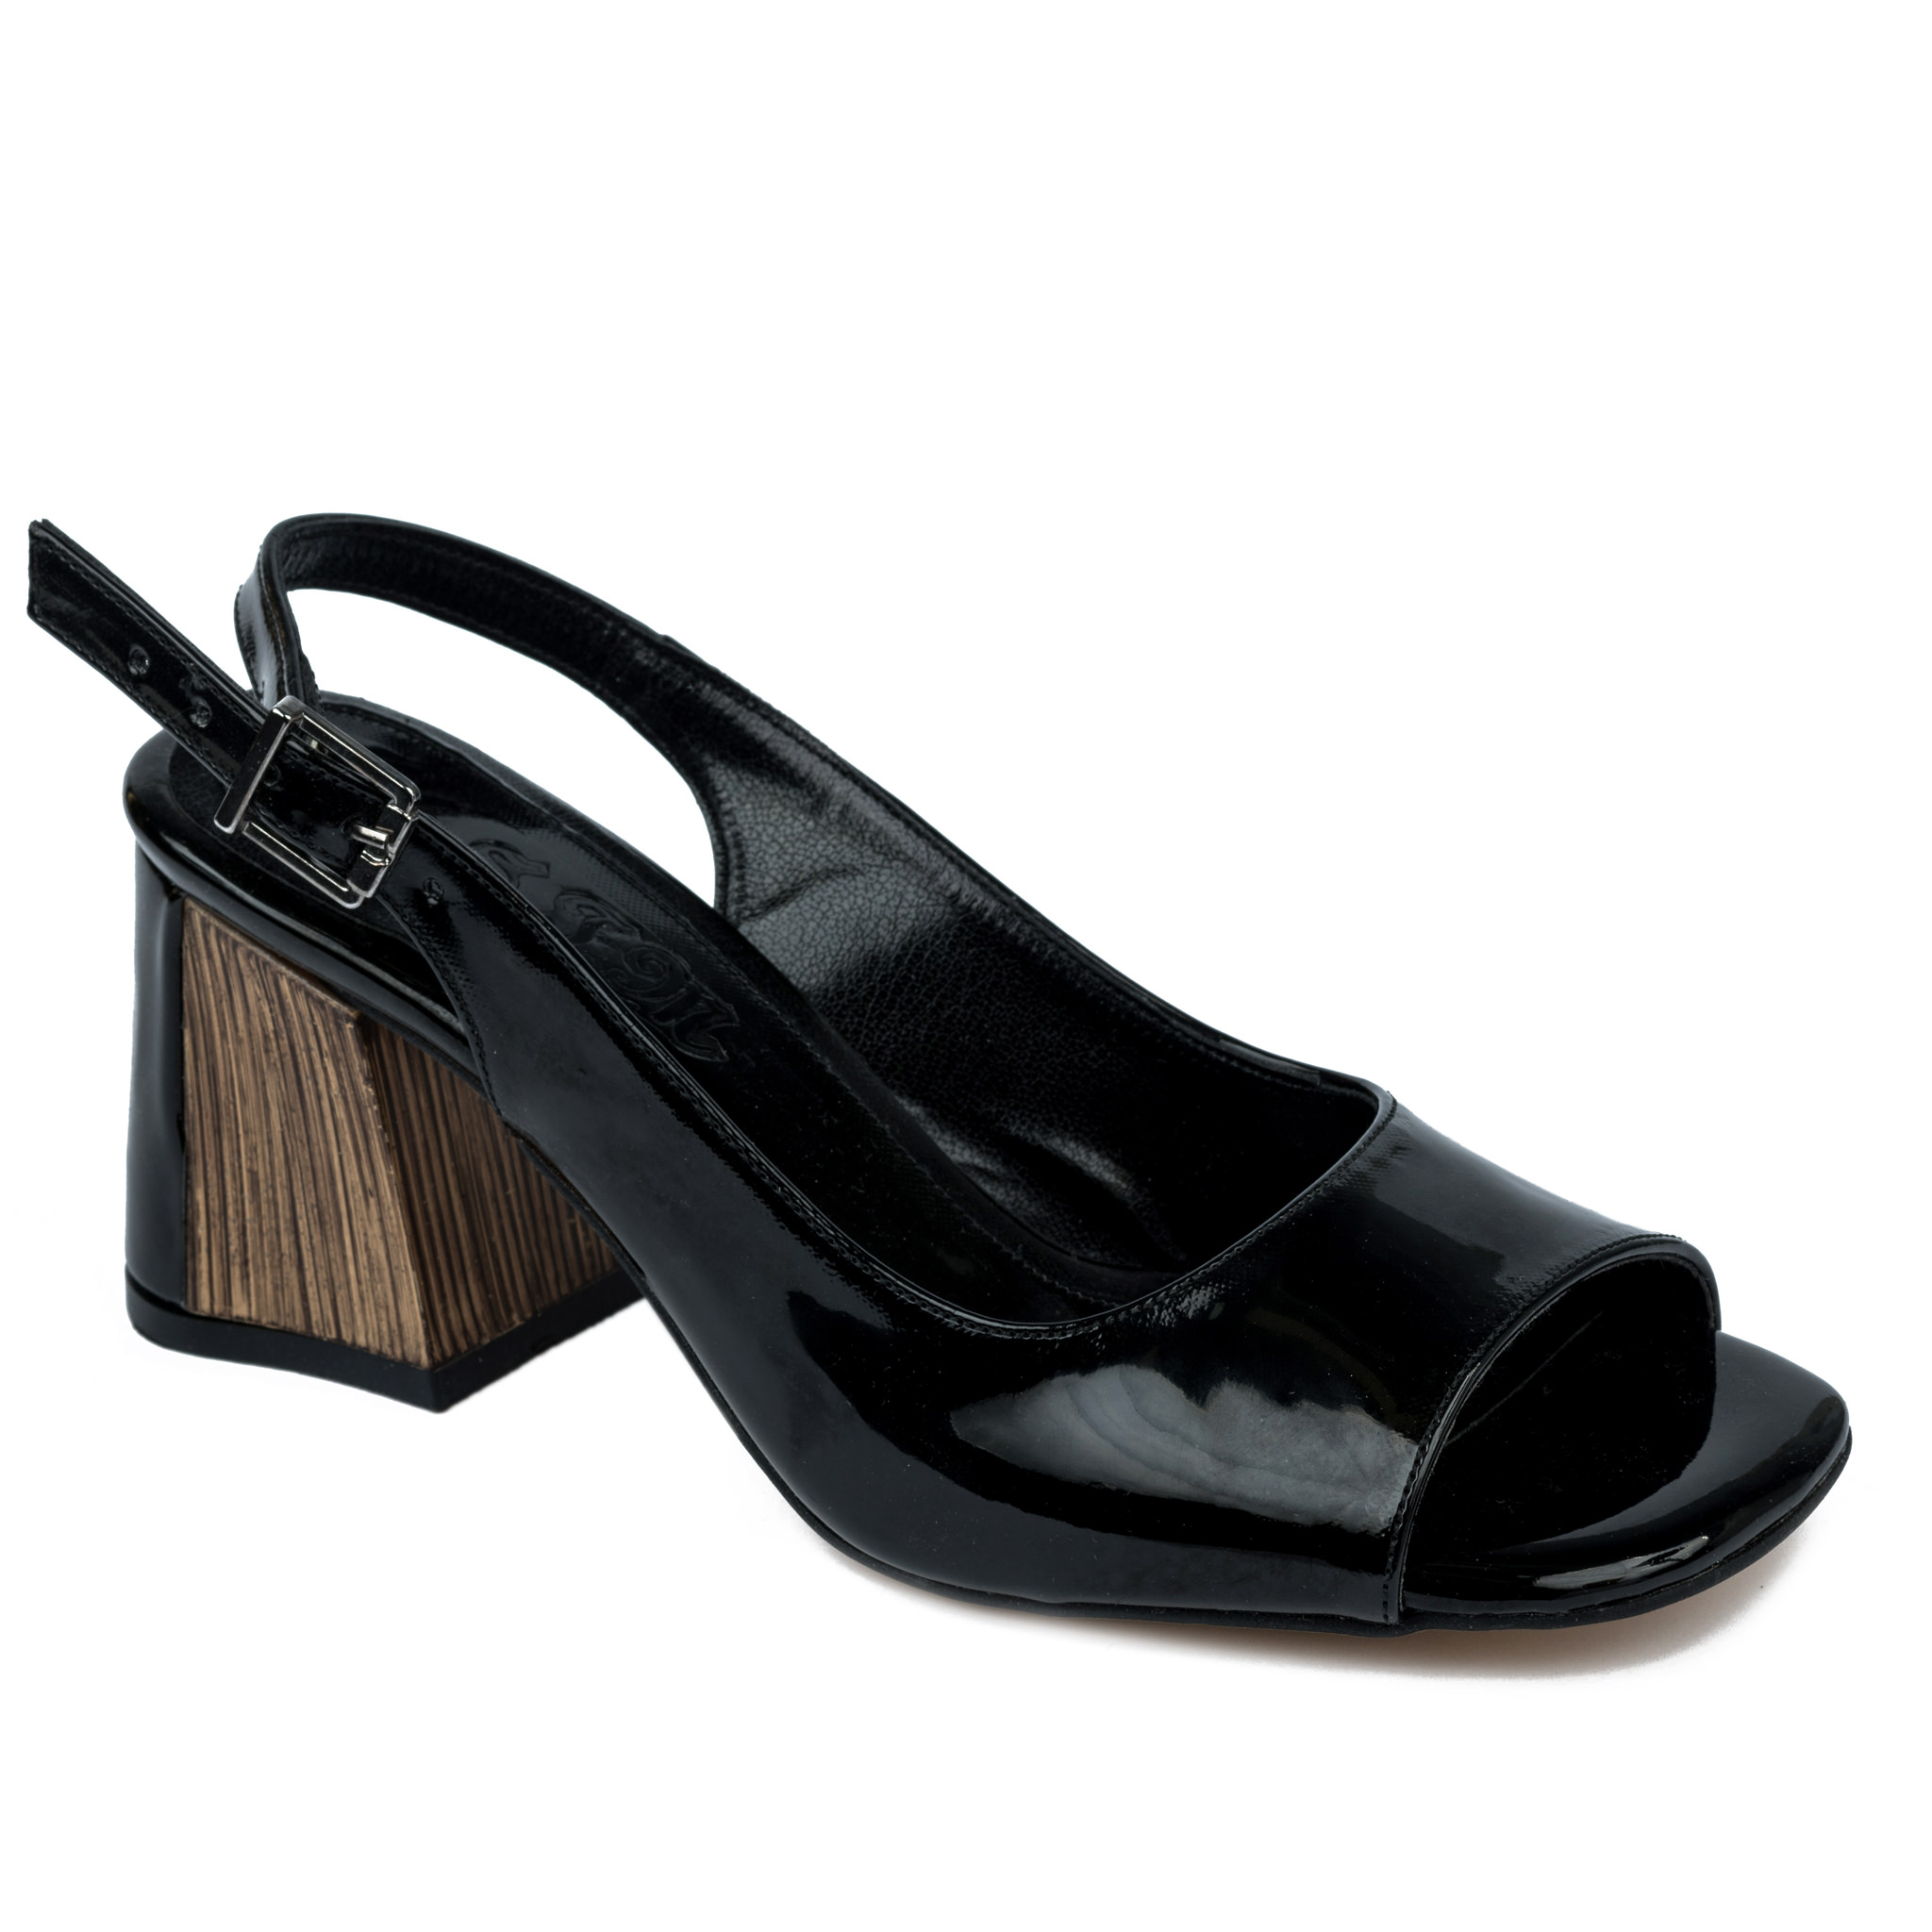 Women sandals A609 - BLACK